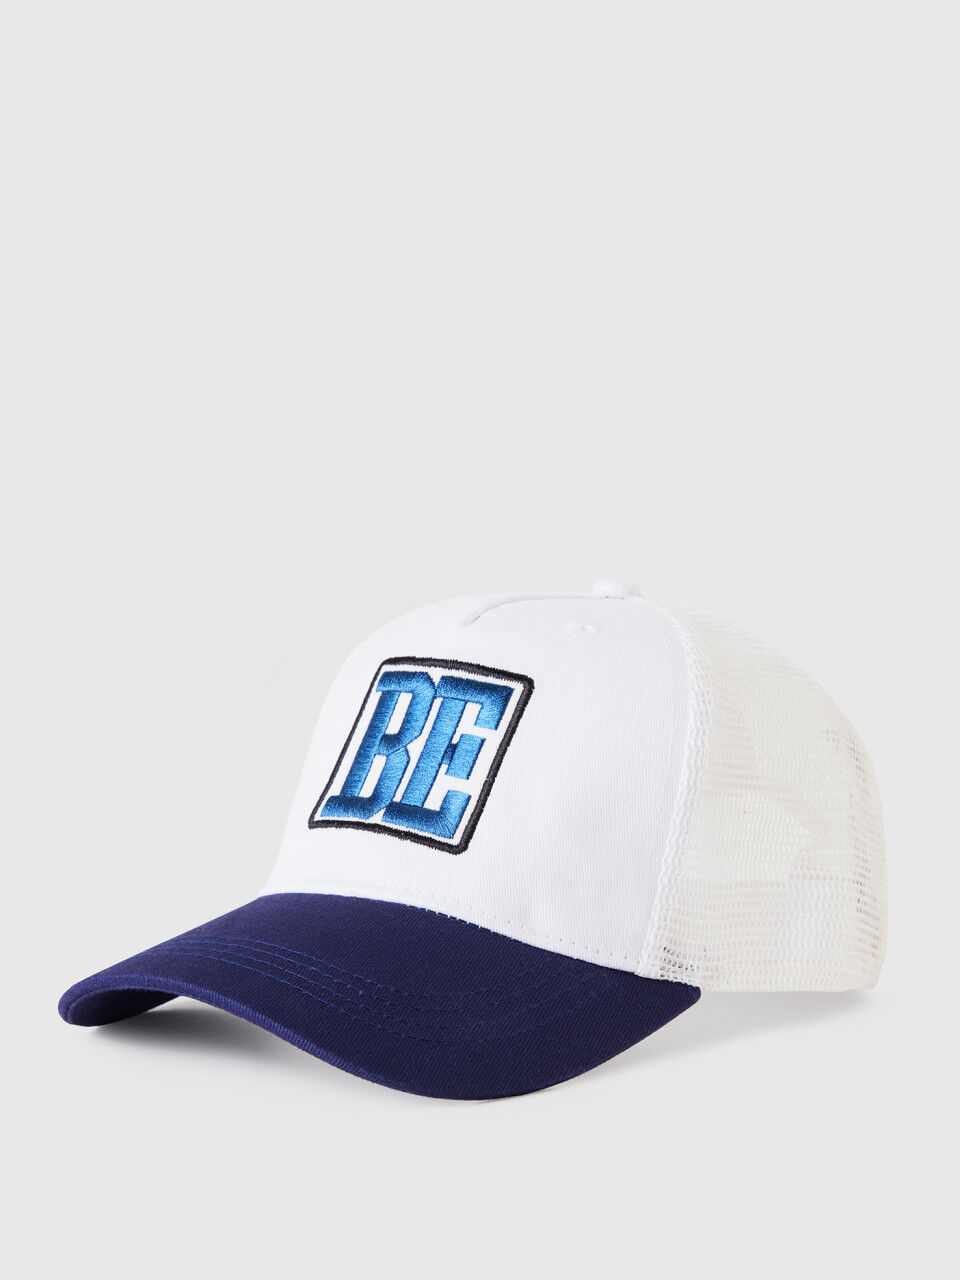 Baseball cap with mesh